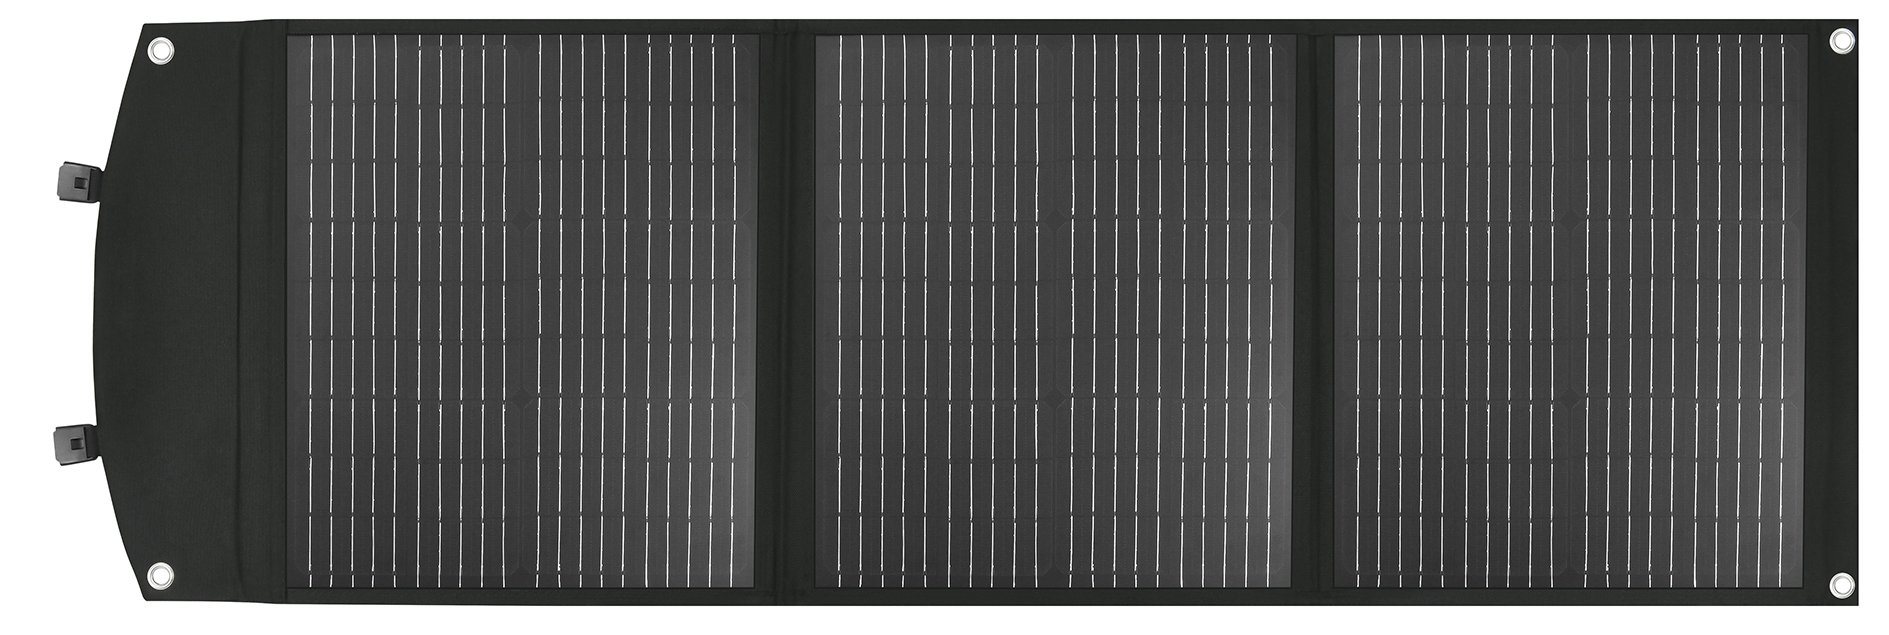 Folding Solar Panel Charger / Pet Monocrystalline Solar Panel 100W Water Proof Fabric / Intelligent Charging Chip